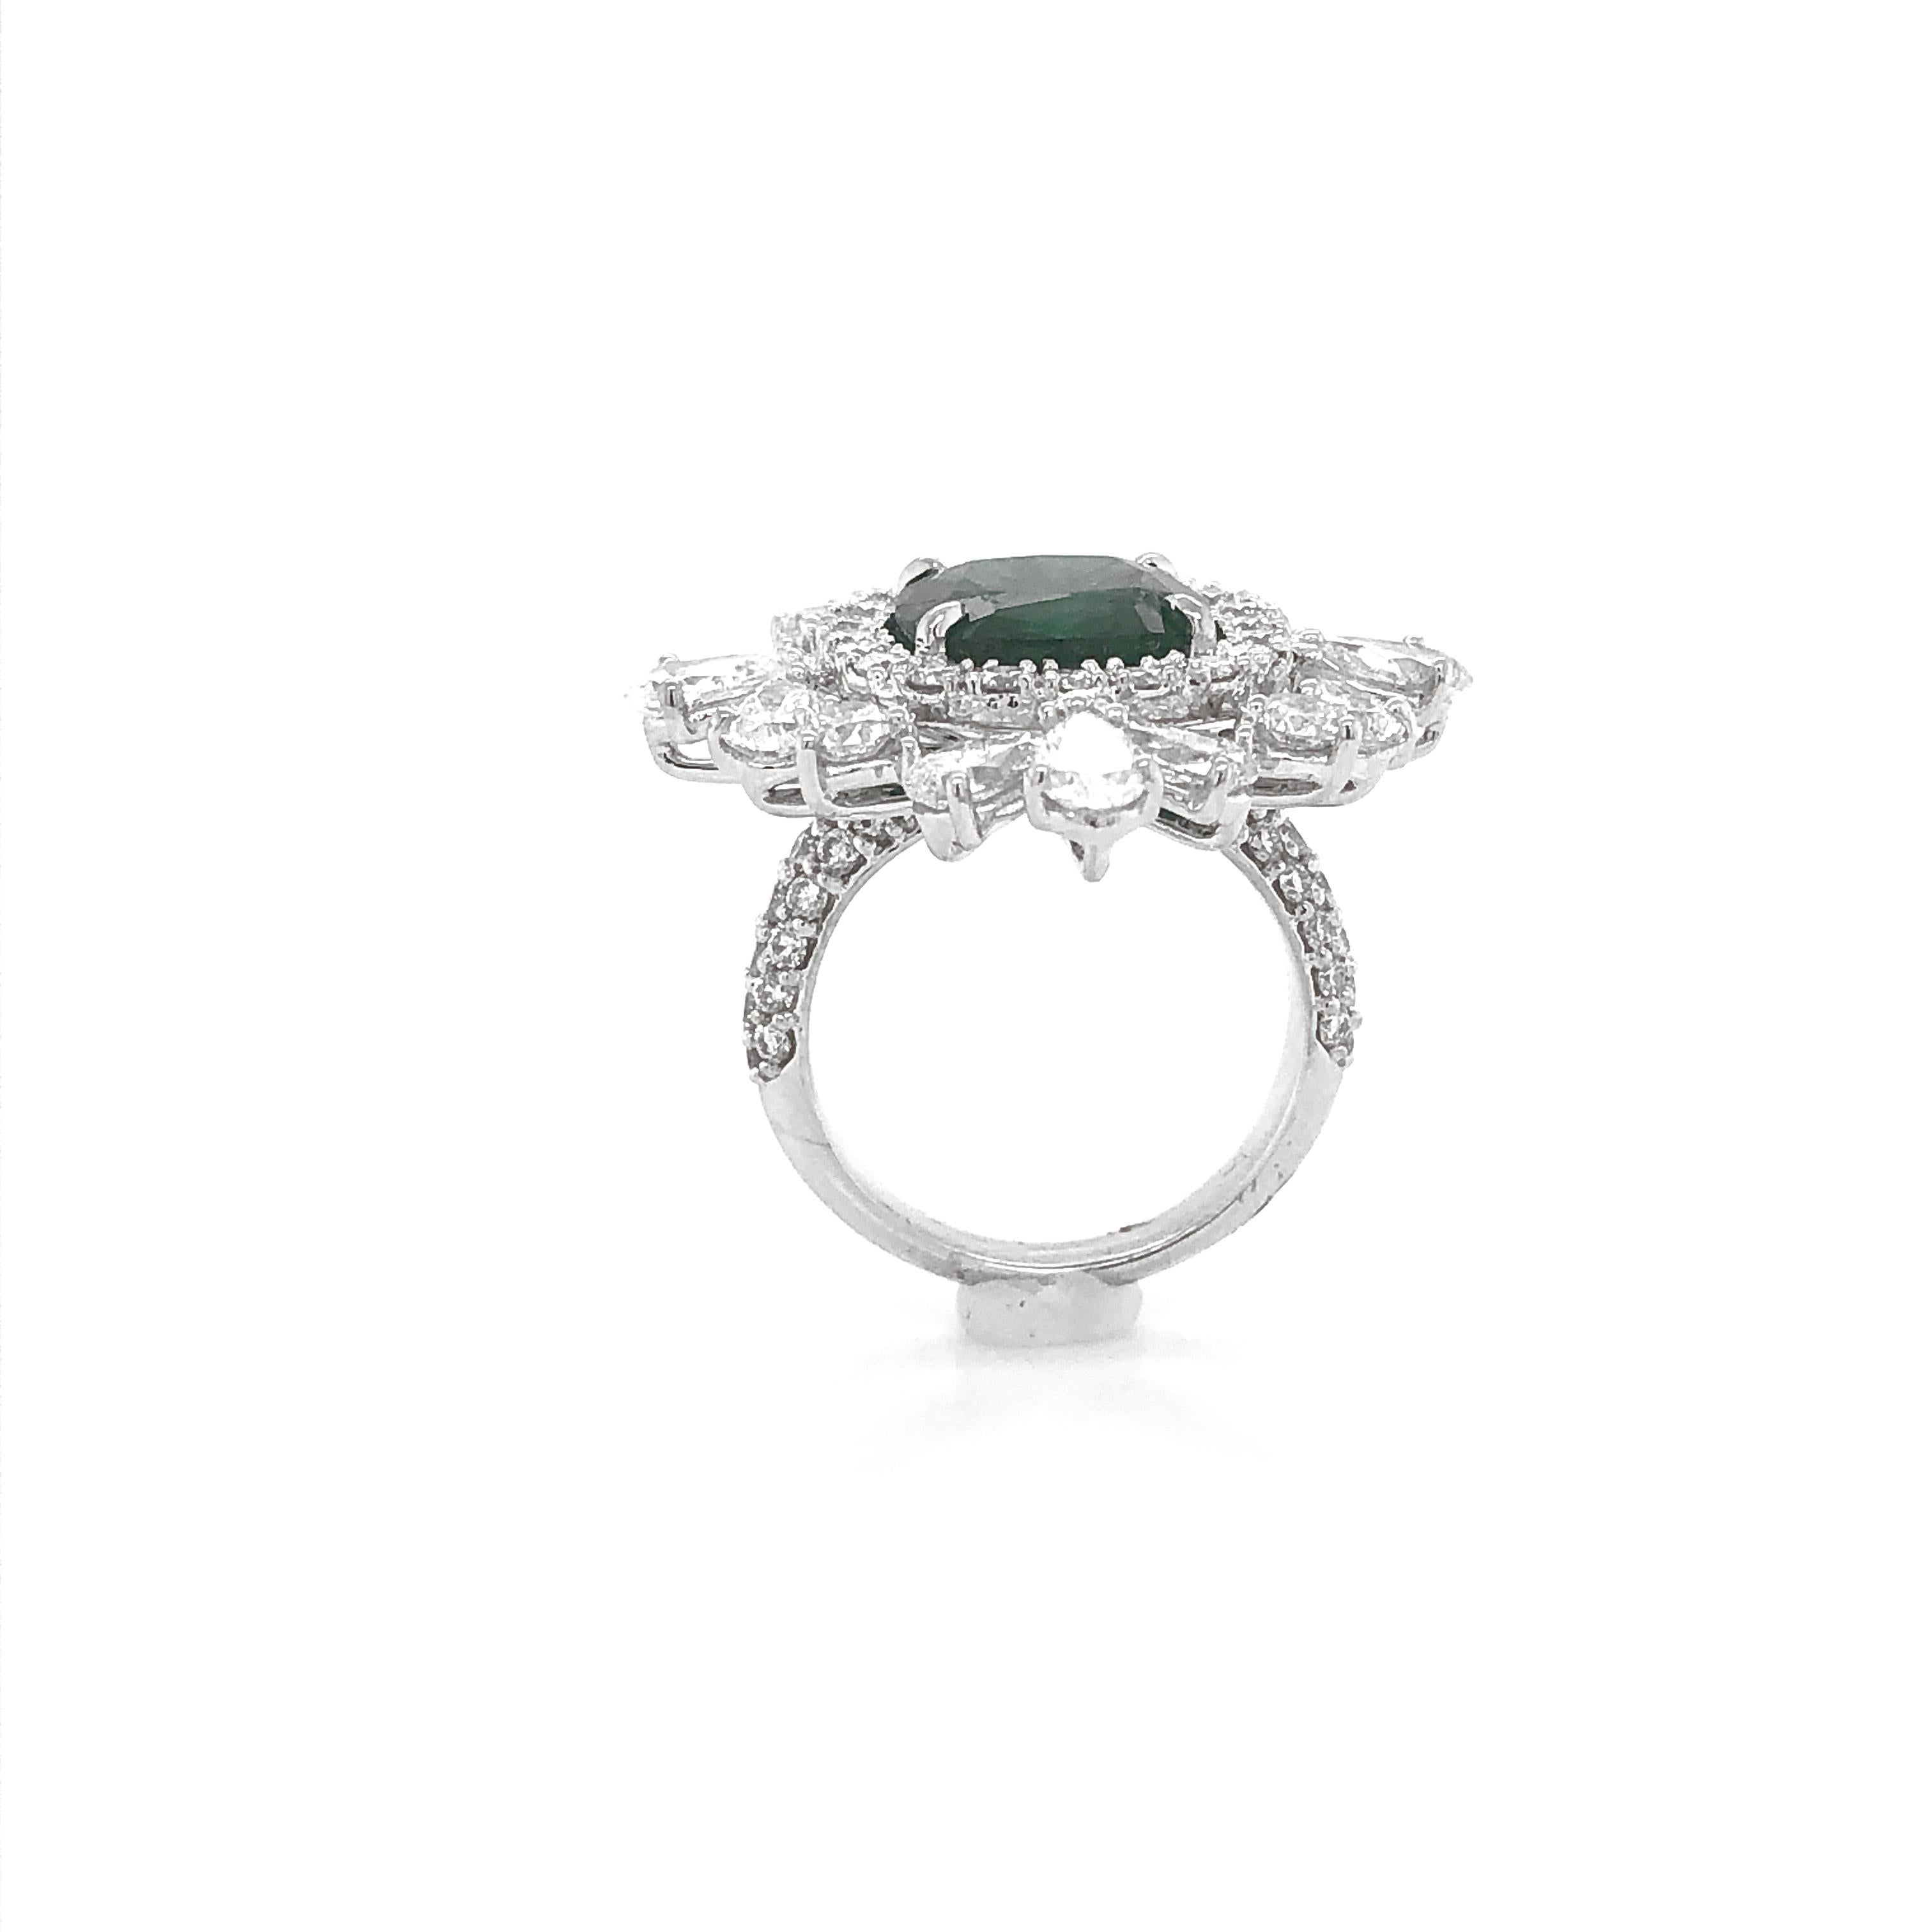 Certified Zambian Cushion Cut Emerald 4.65 Carat Diamond Platinum Cocktail Ring For Sale 2